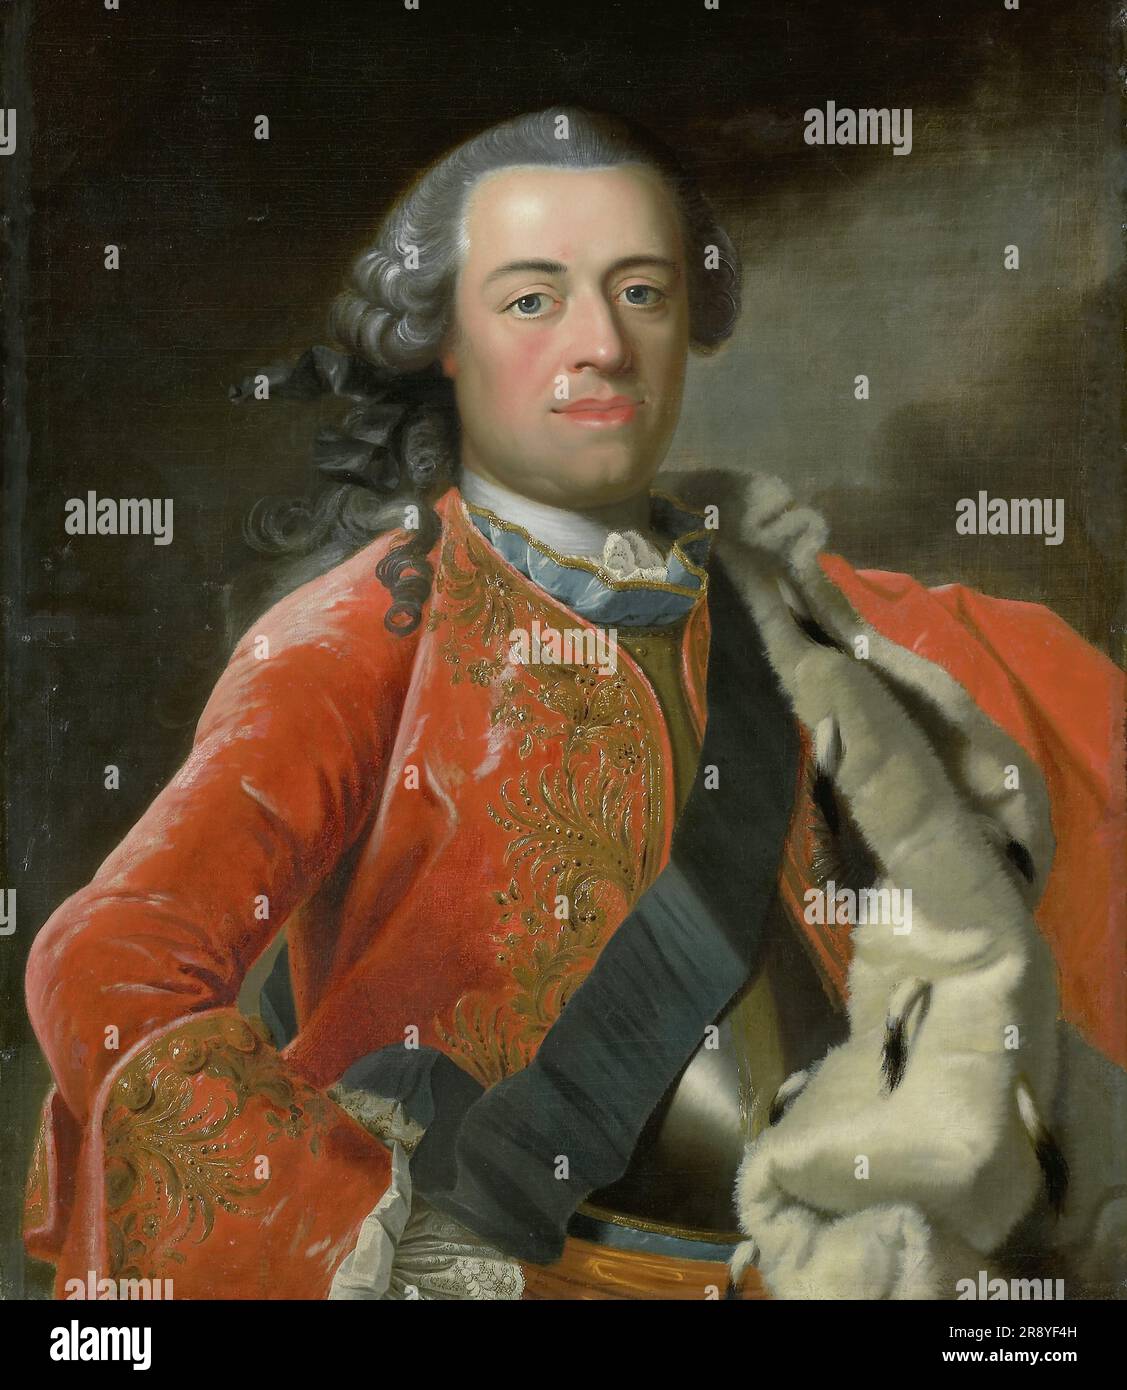 Portrait of William IV, Prince of Orange, c.1750. Stock Photo